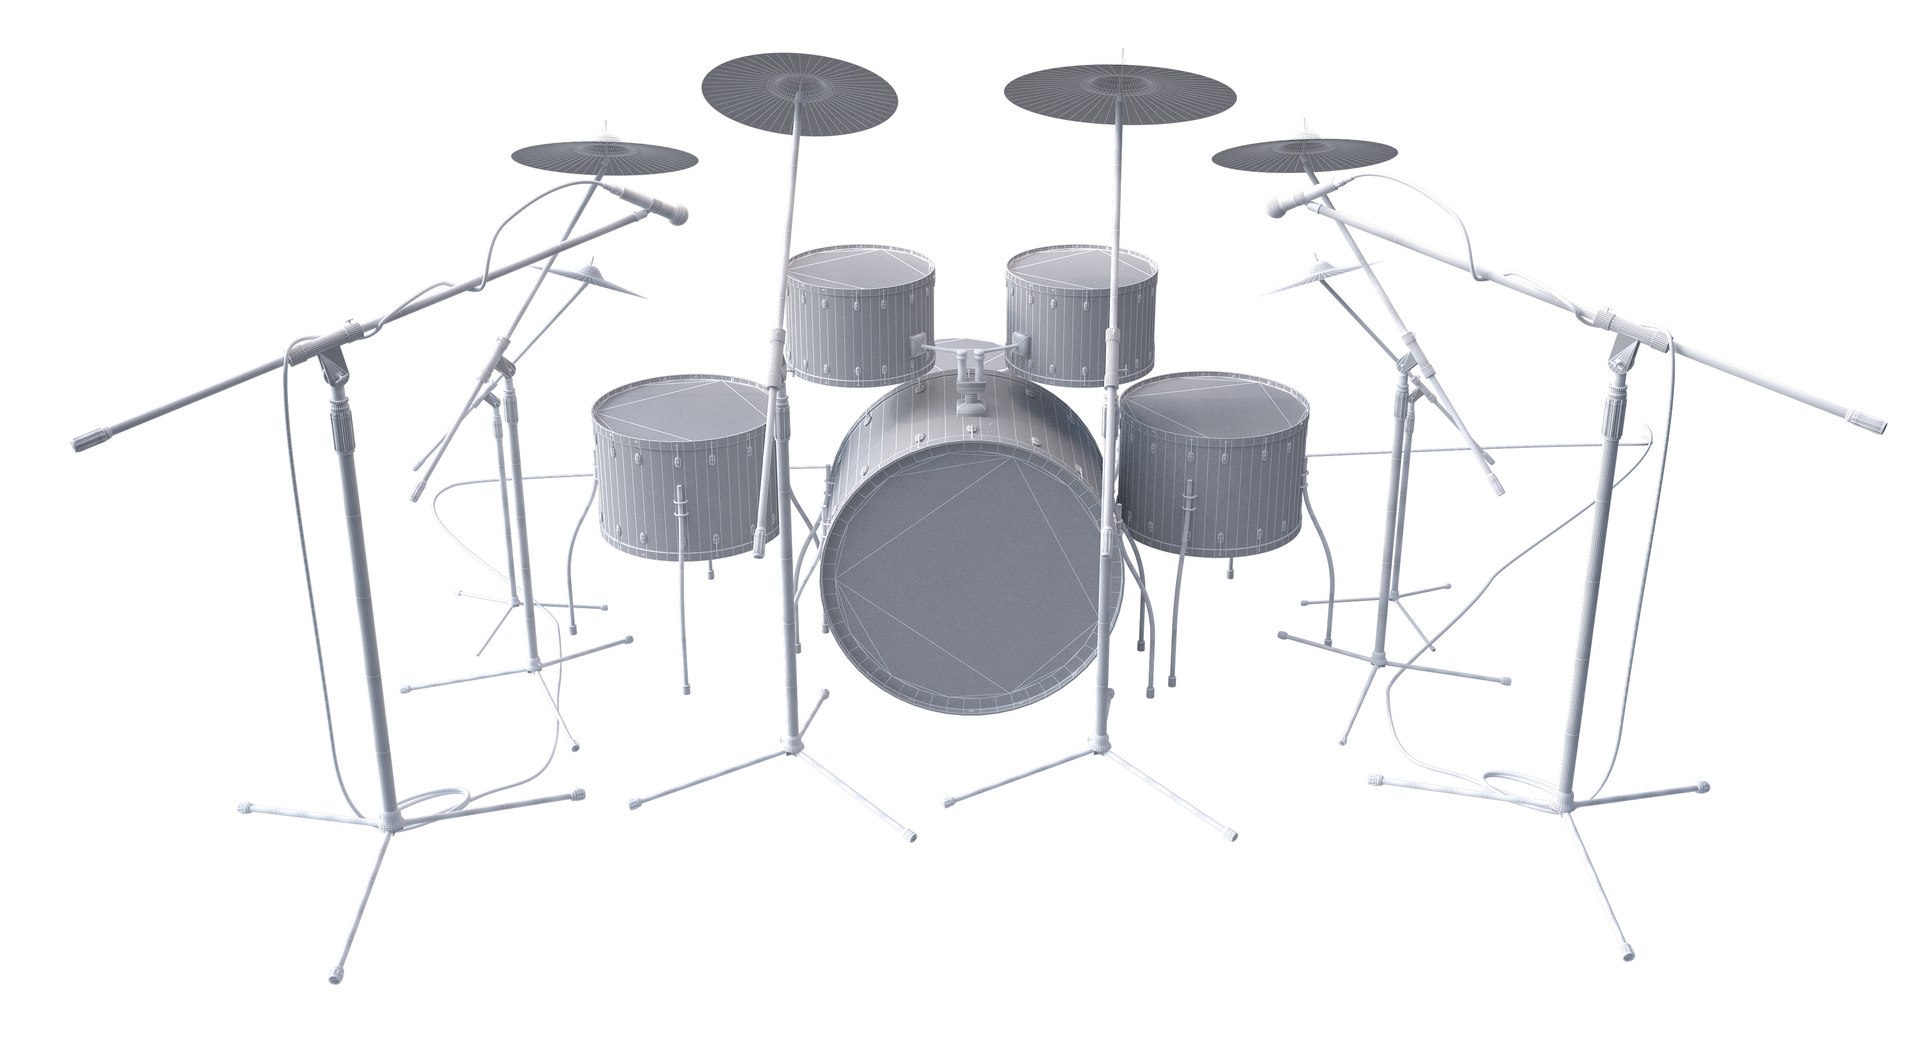 Drums drumset music 3D model - TurboSquid 1255624